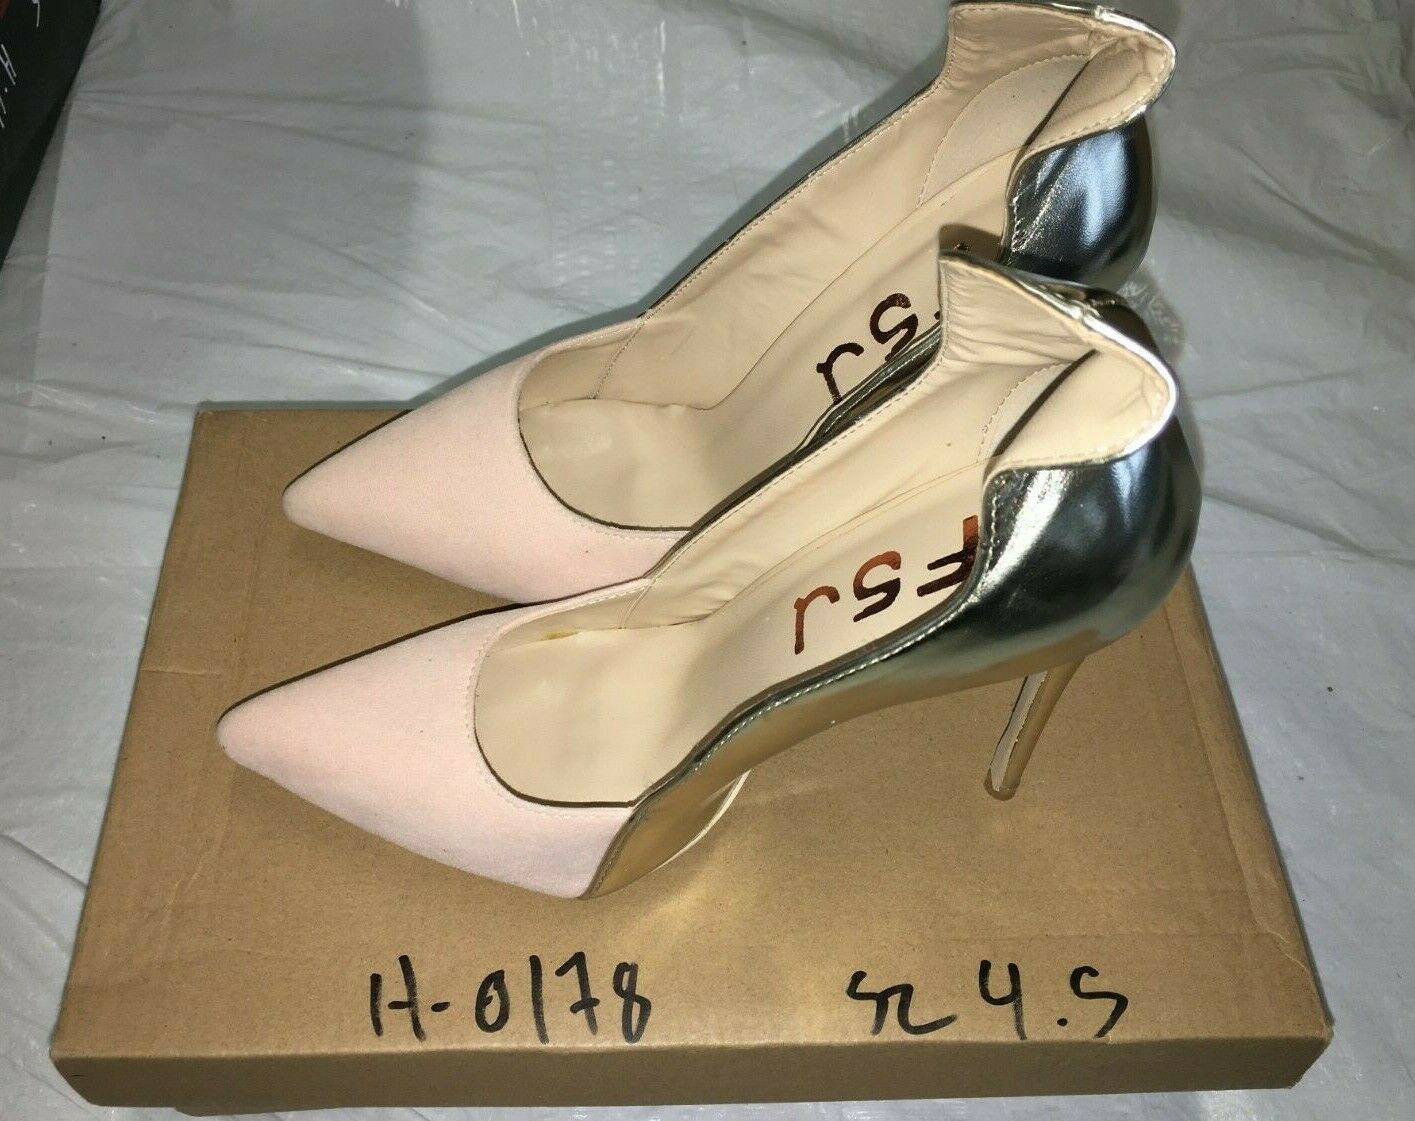 FSJ Women's Shoes Multicolor, Pointed Toe, High Heels, Size 4.5